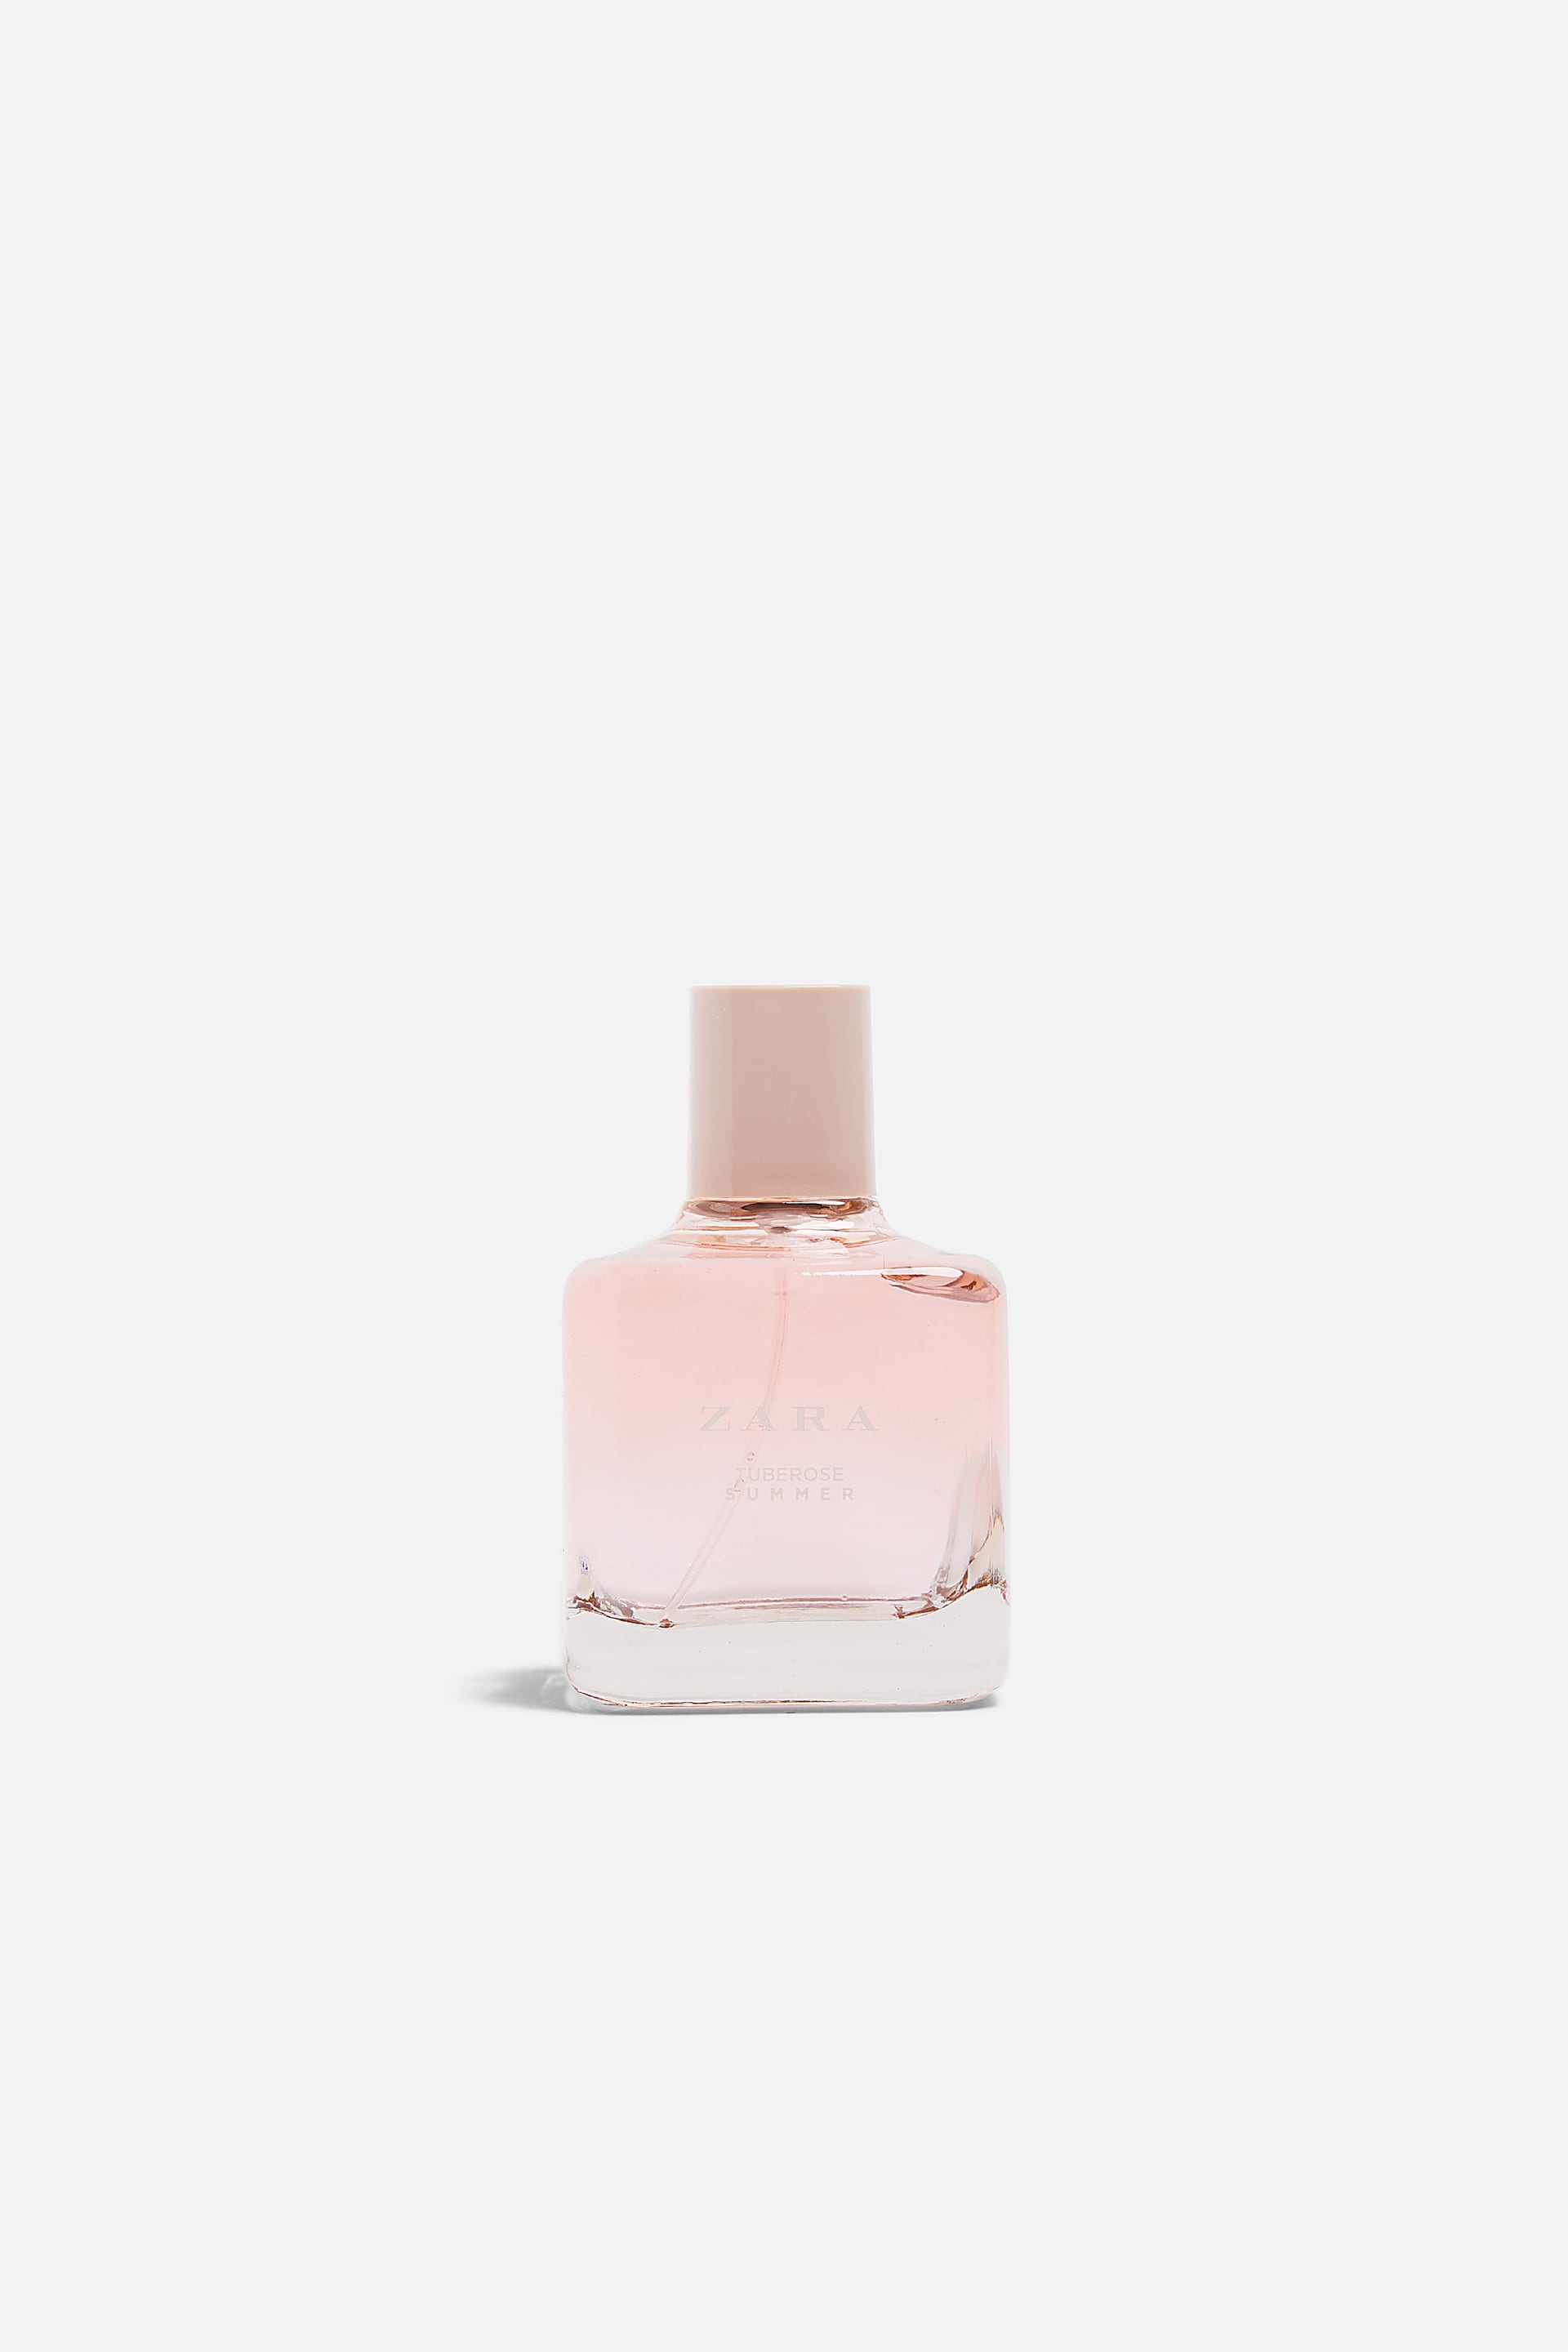 Tuberose Summer Zara perfume - a new 